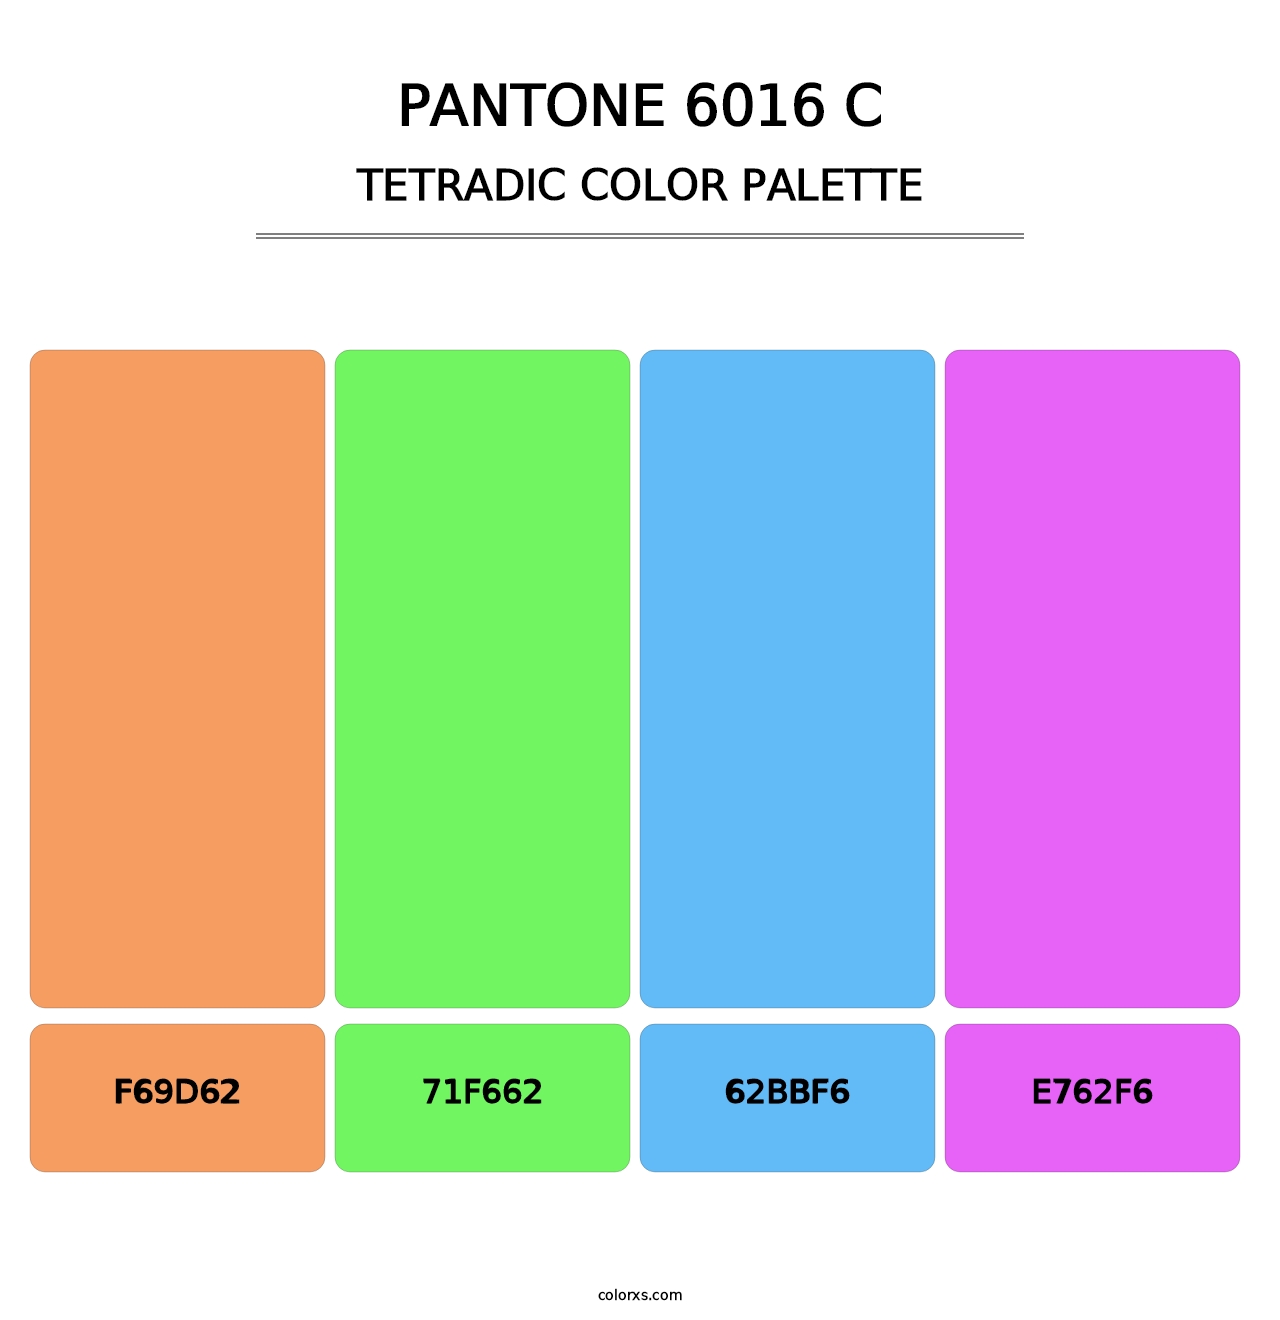 PANTONE 6016 C - Tetradic Color Palette